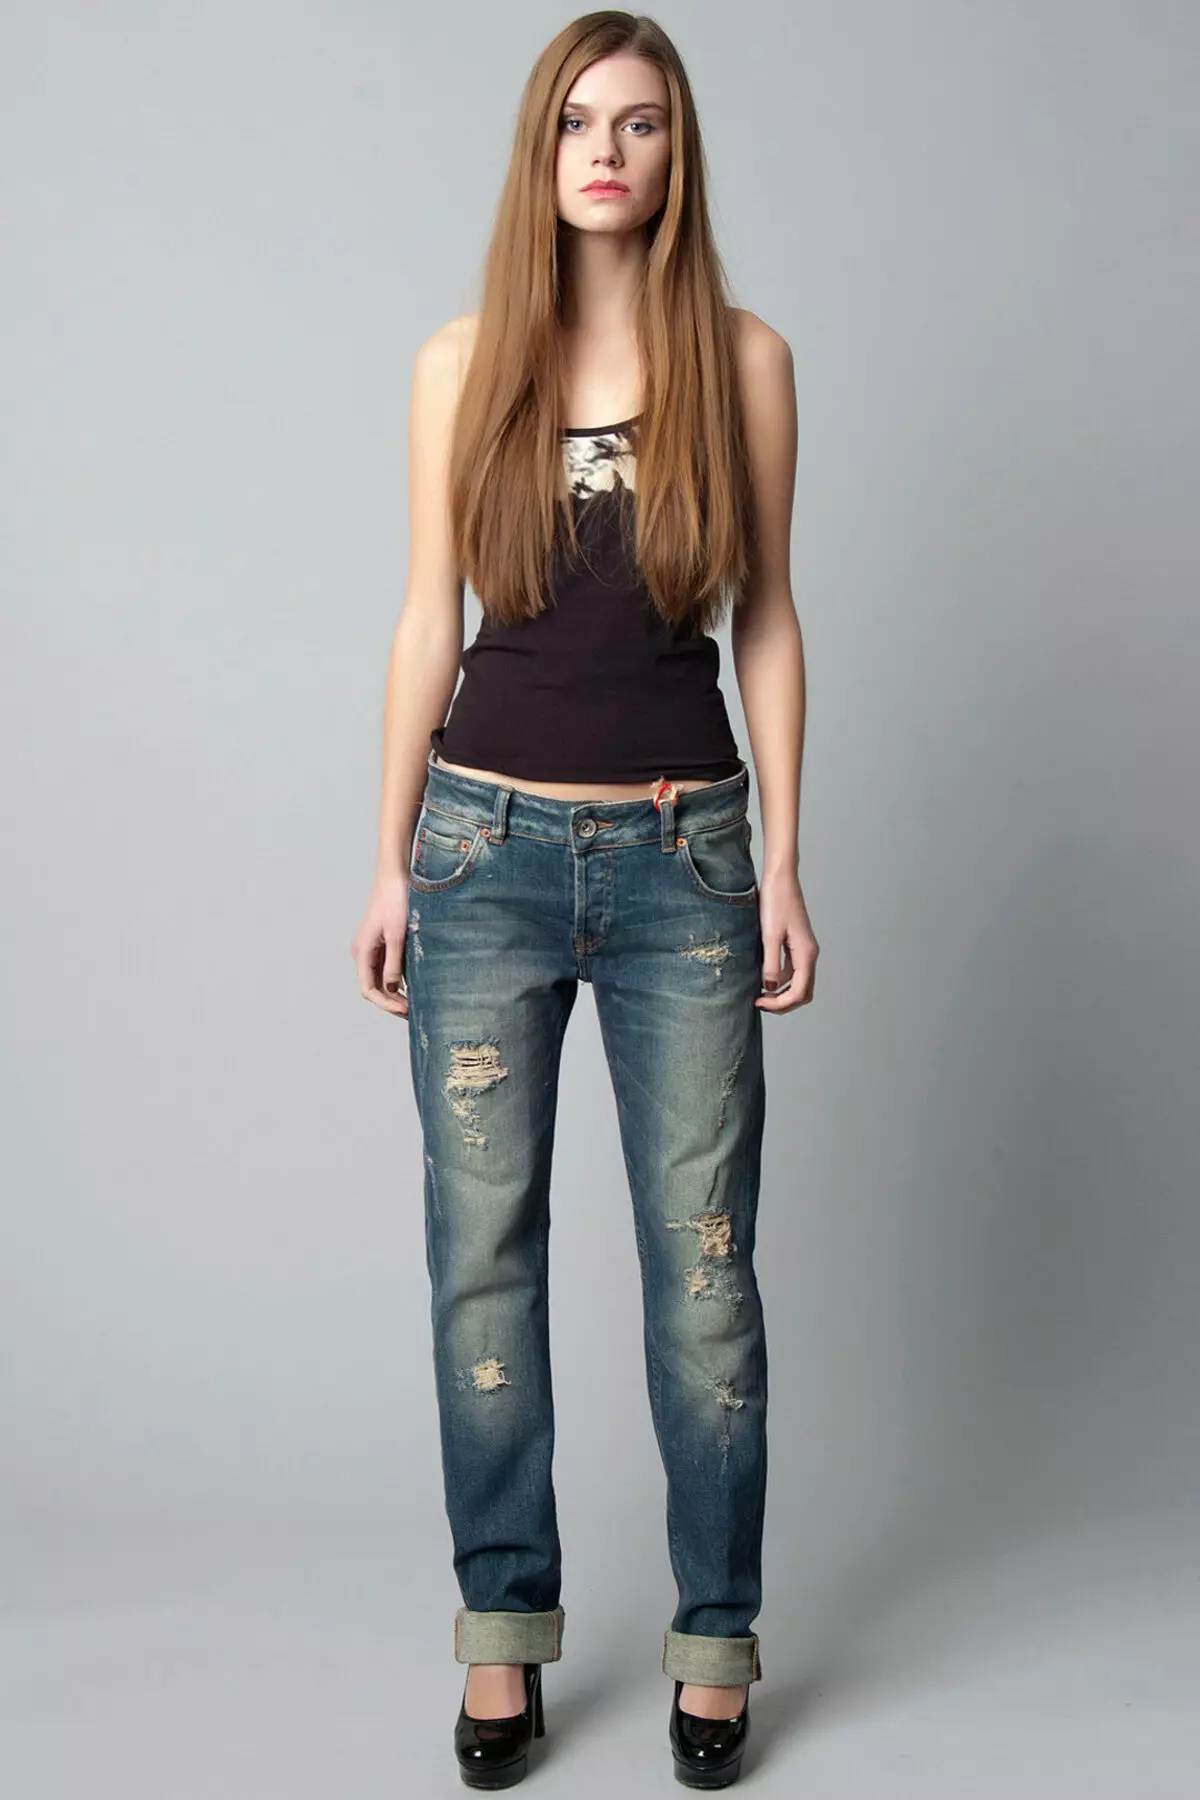 LTB Jeans (43 fotos): Modelos femeninos, opiniones 1088_31